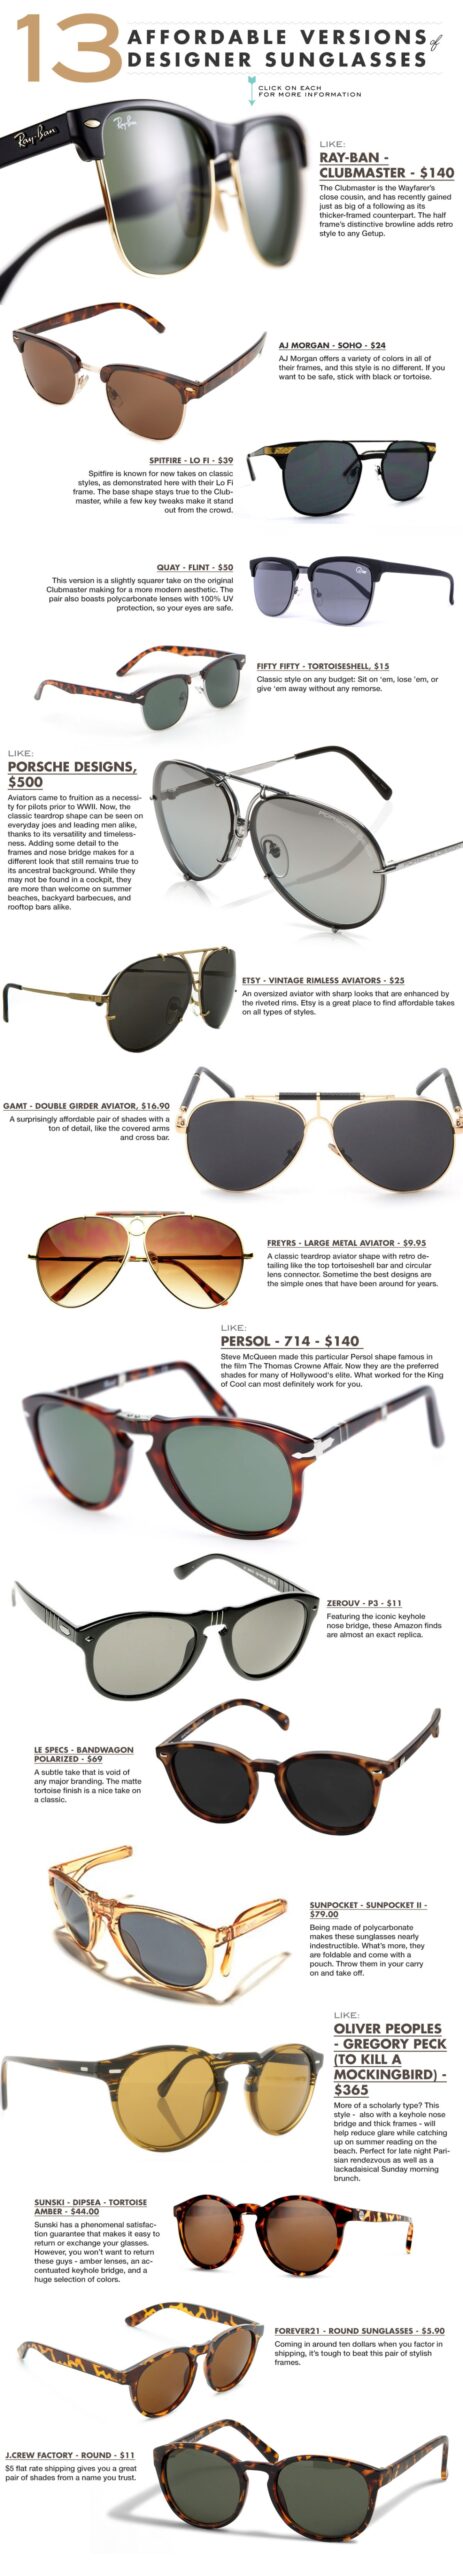 affordable designer sunglasses Bulan 5  Affordable Versions of Designer Sunglasses · Primer